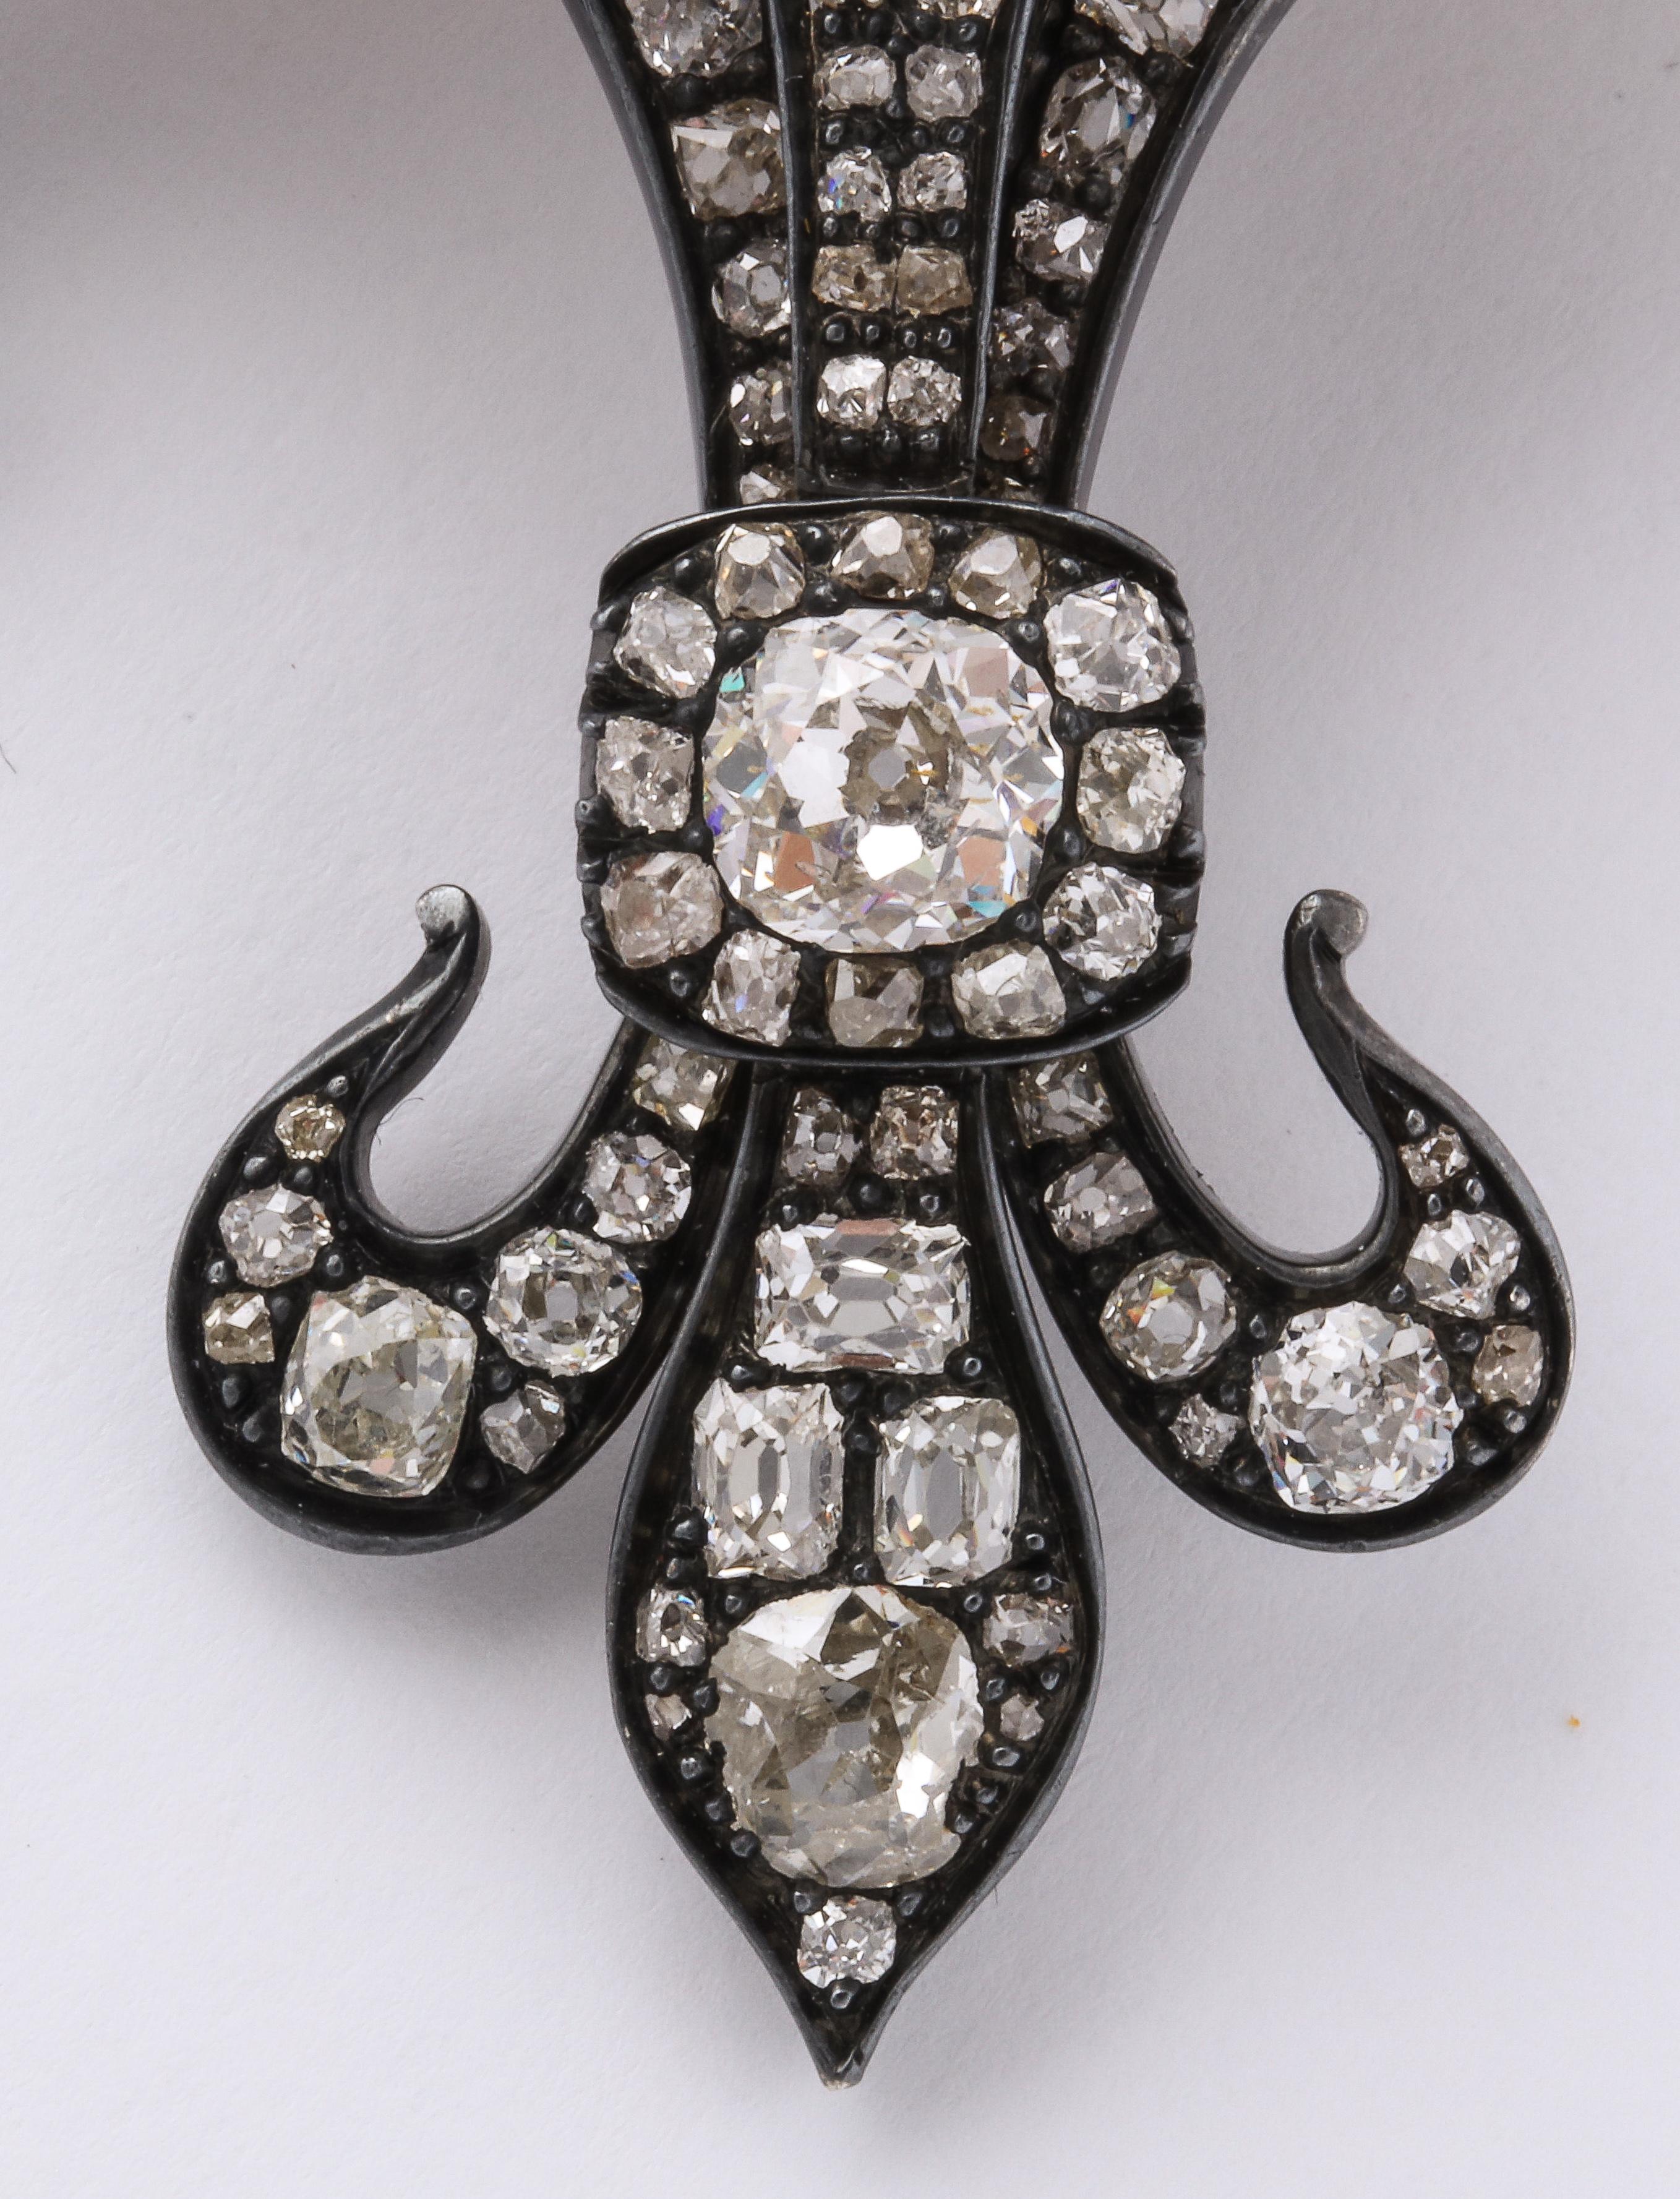 Antique Fleur de Lis Diamond Gold pendant brooch in 14k gold set with over 124 diamonds.

Material:
14k gold, 31 gm

Stones: 
Over 124 diamonds, 213 carat old mine cut h/vvs

Measurements:
3 1/4 inch by 2 inch wide, 3/16 inch deep
